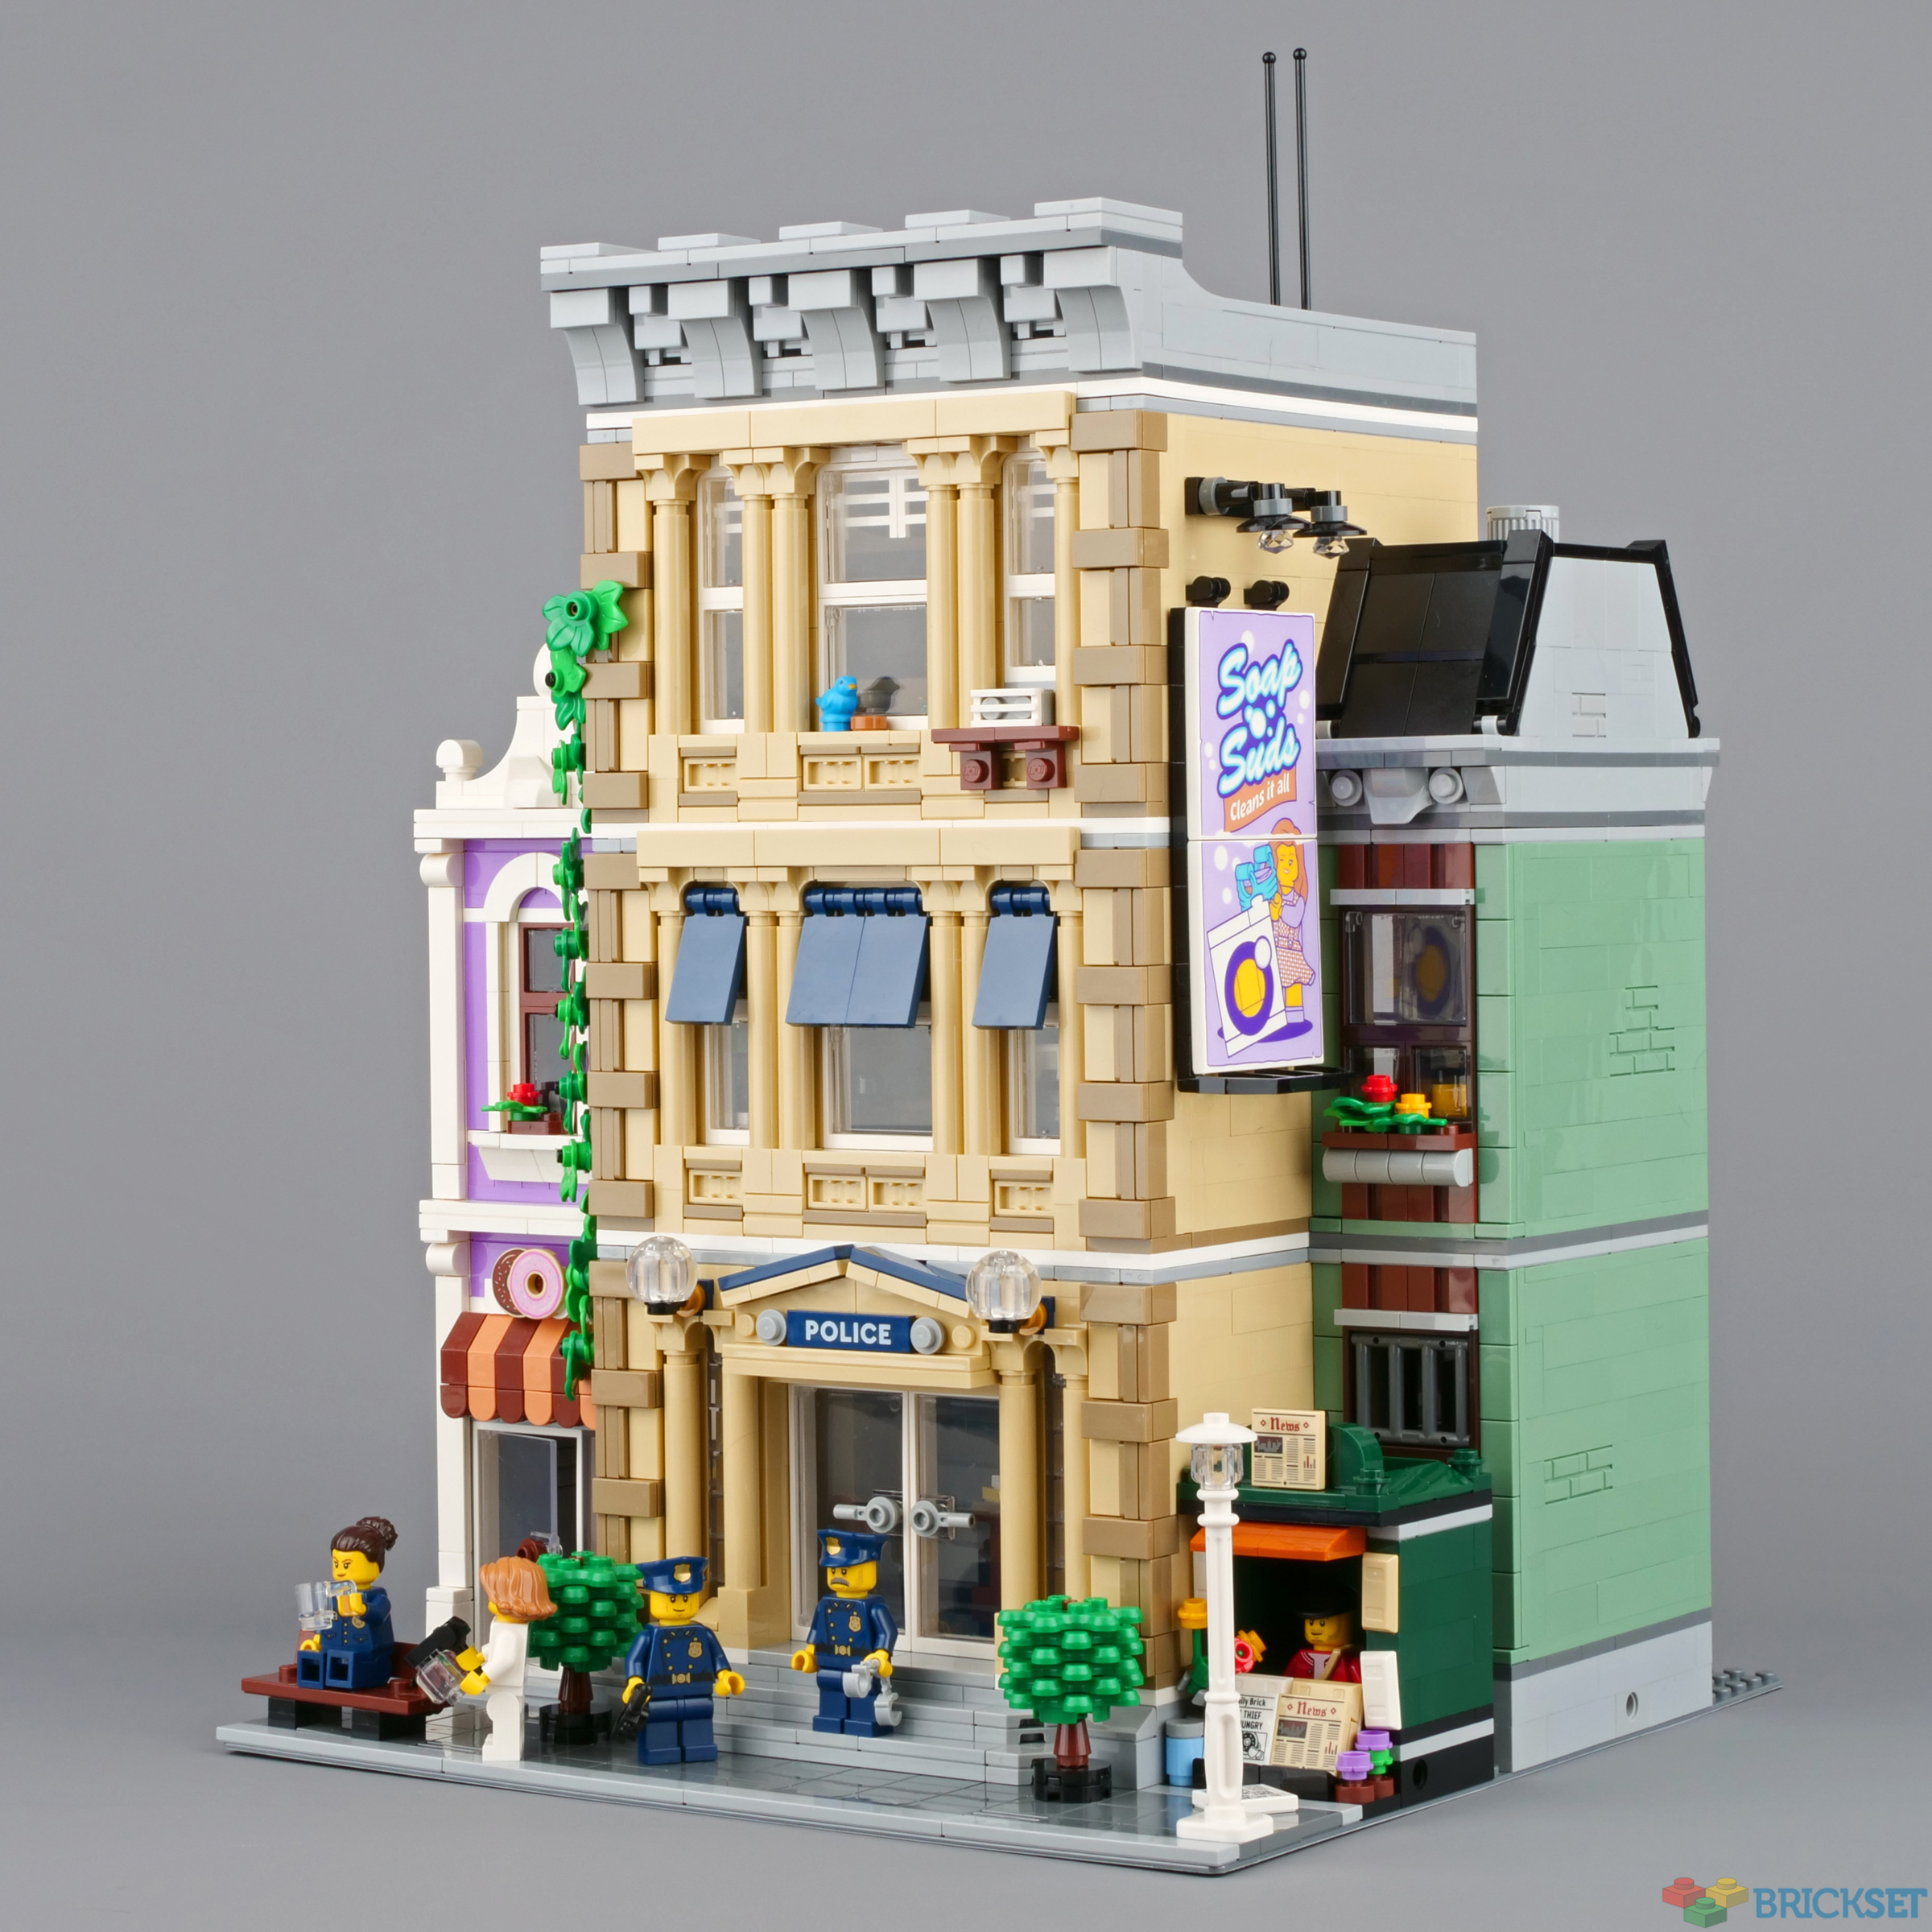 LEGO® Modular Building reveal: 10278 Police Station